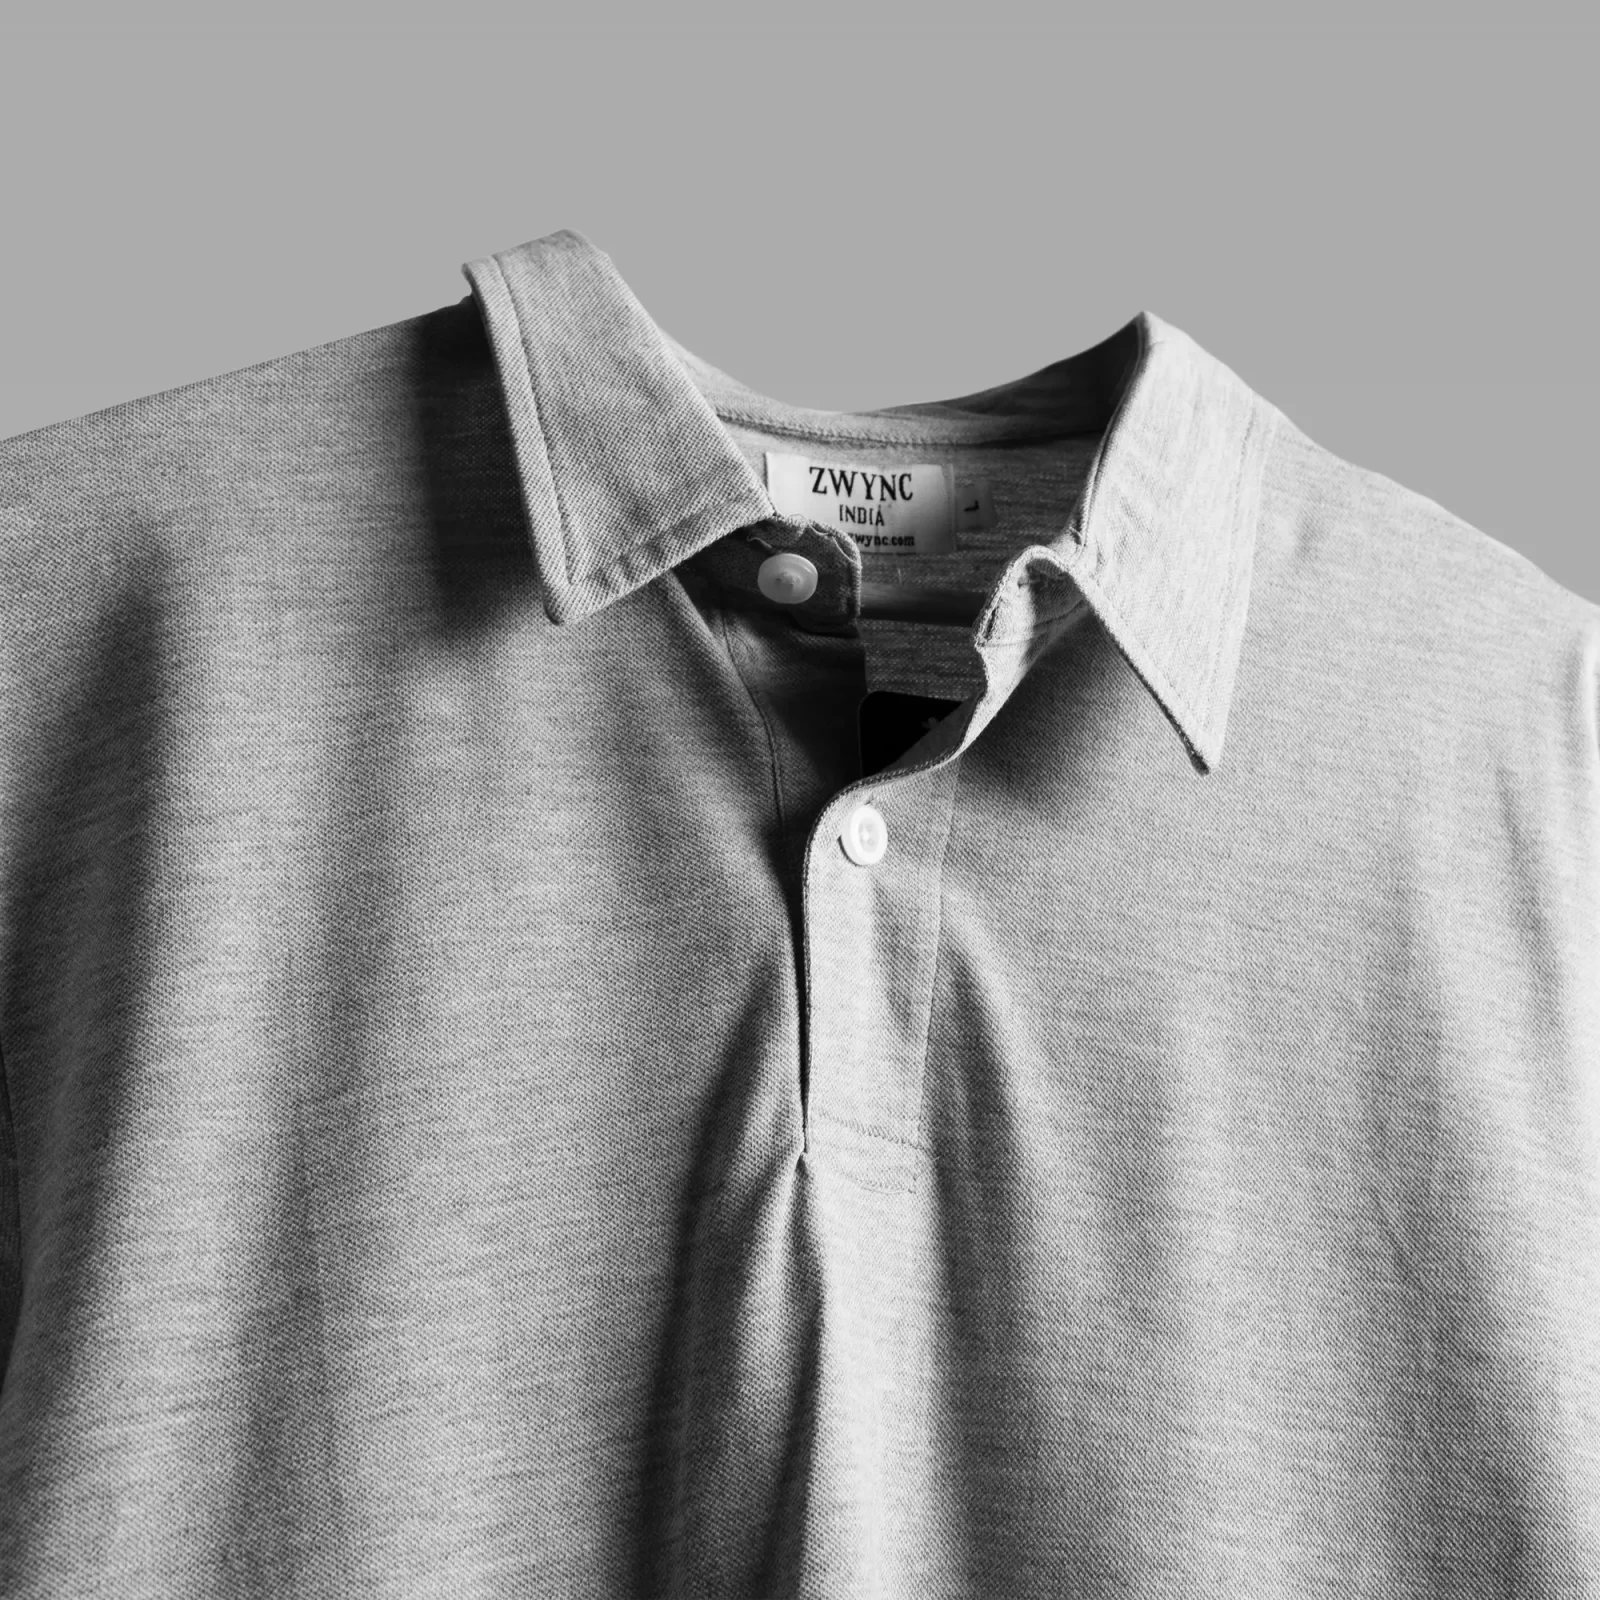 Men’s Grey Polo shirts , Best Men polo shirts in bangalore